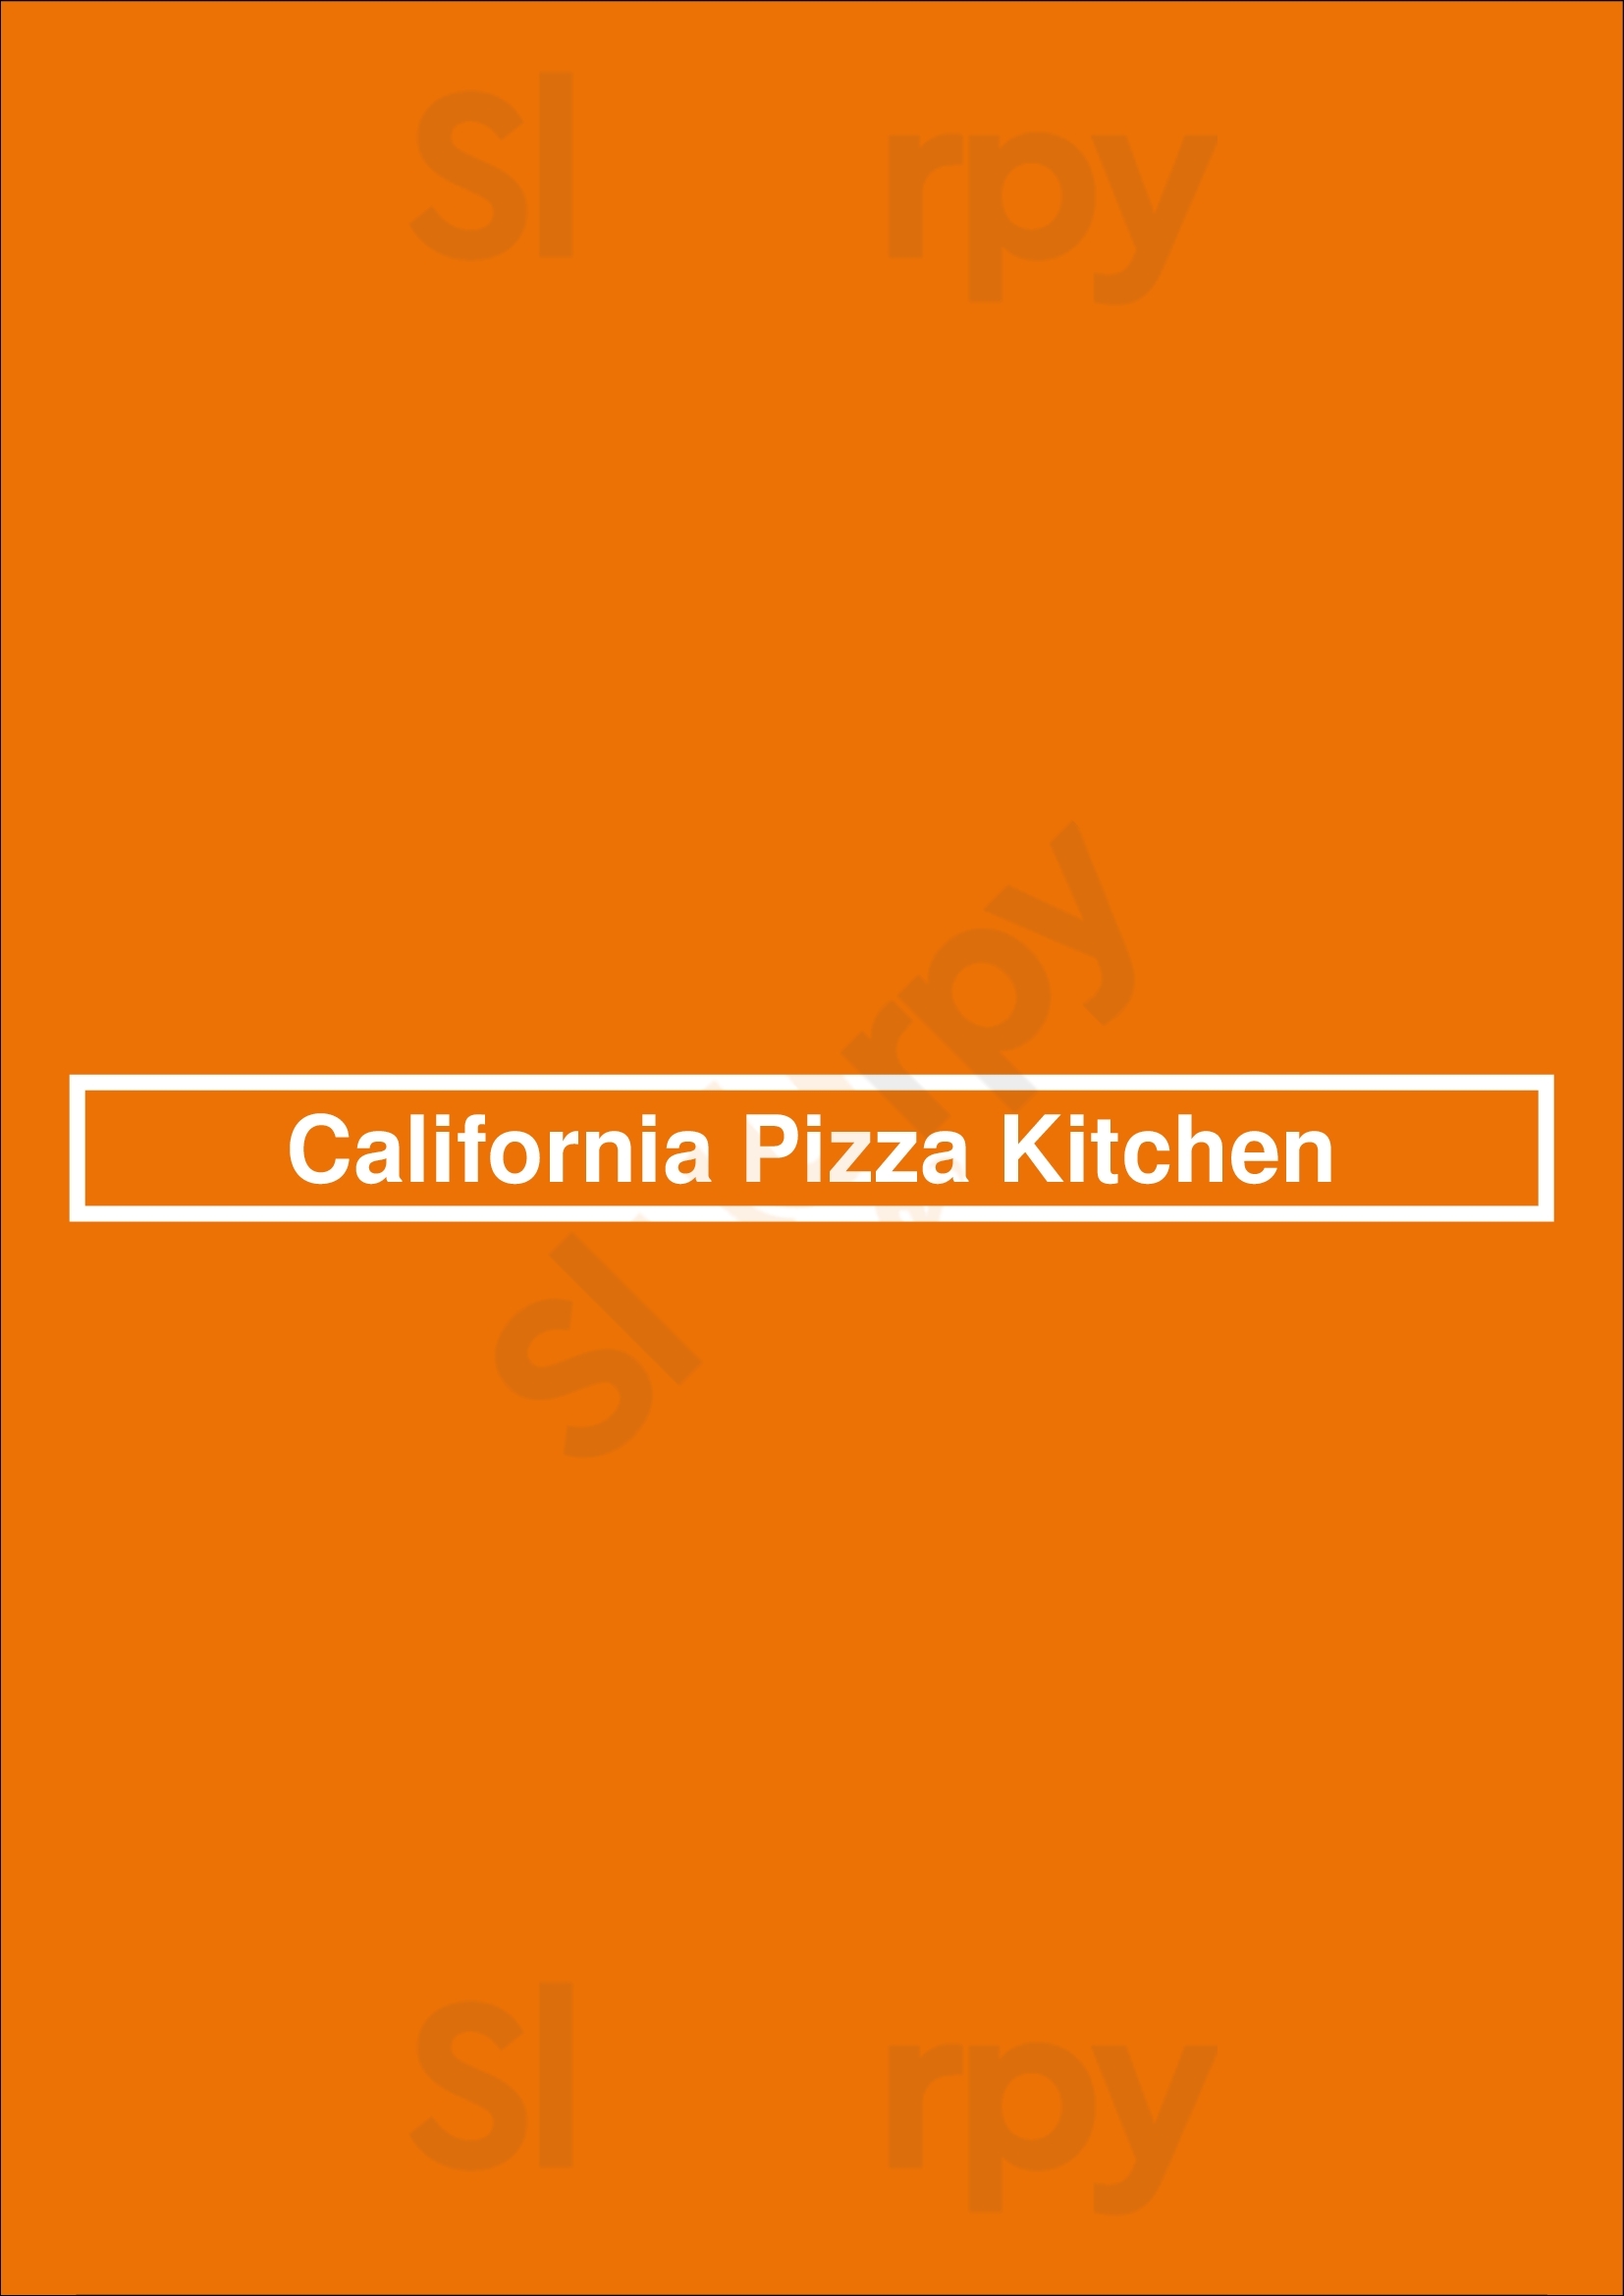 California Pizza Kitchen San Antonio Menu - 1